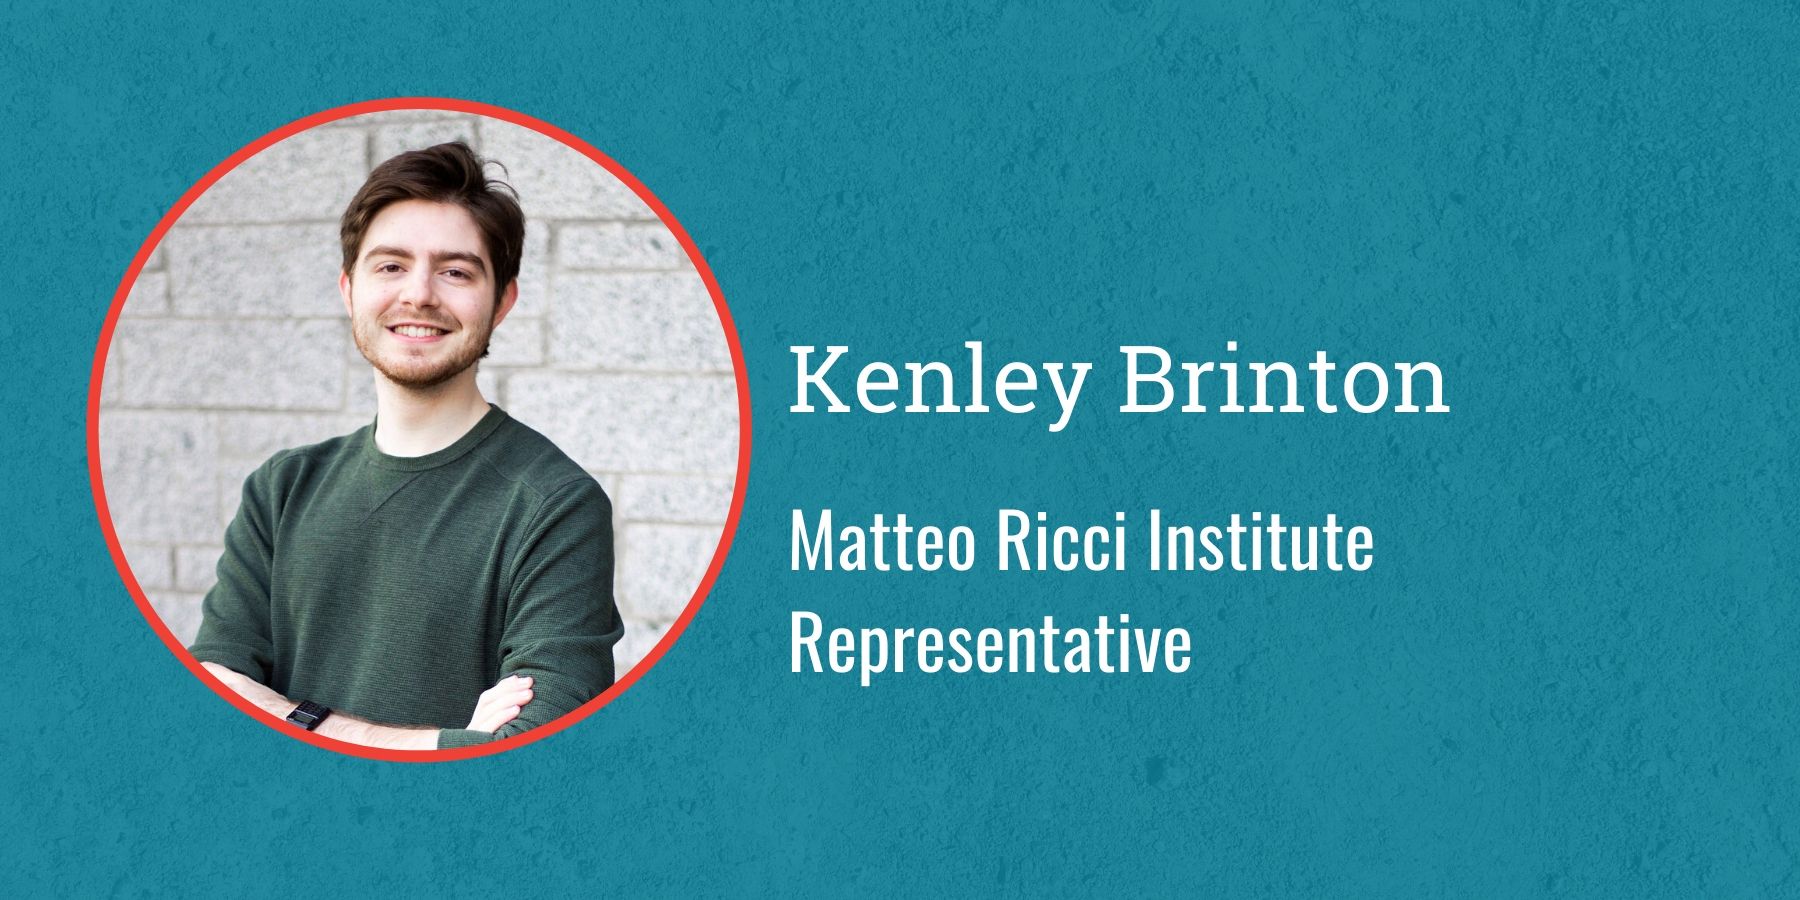 Photo of Kenley Brinton and text Matteo Ricci Institute Representative